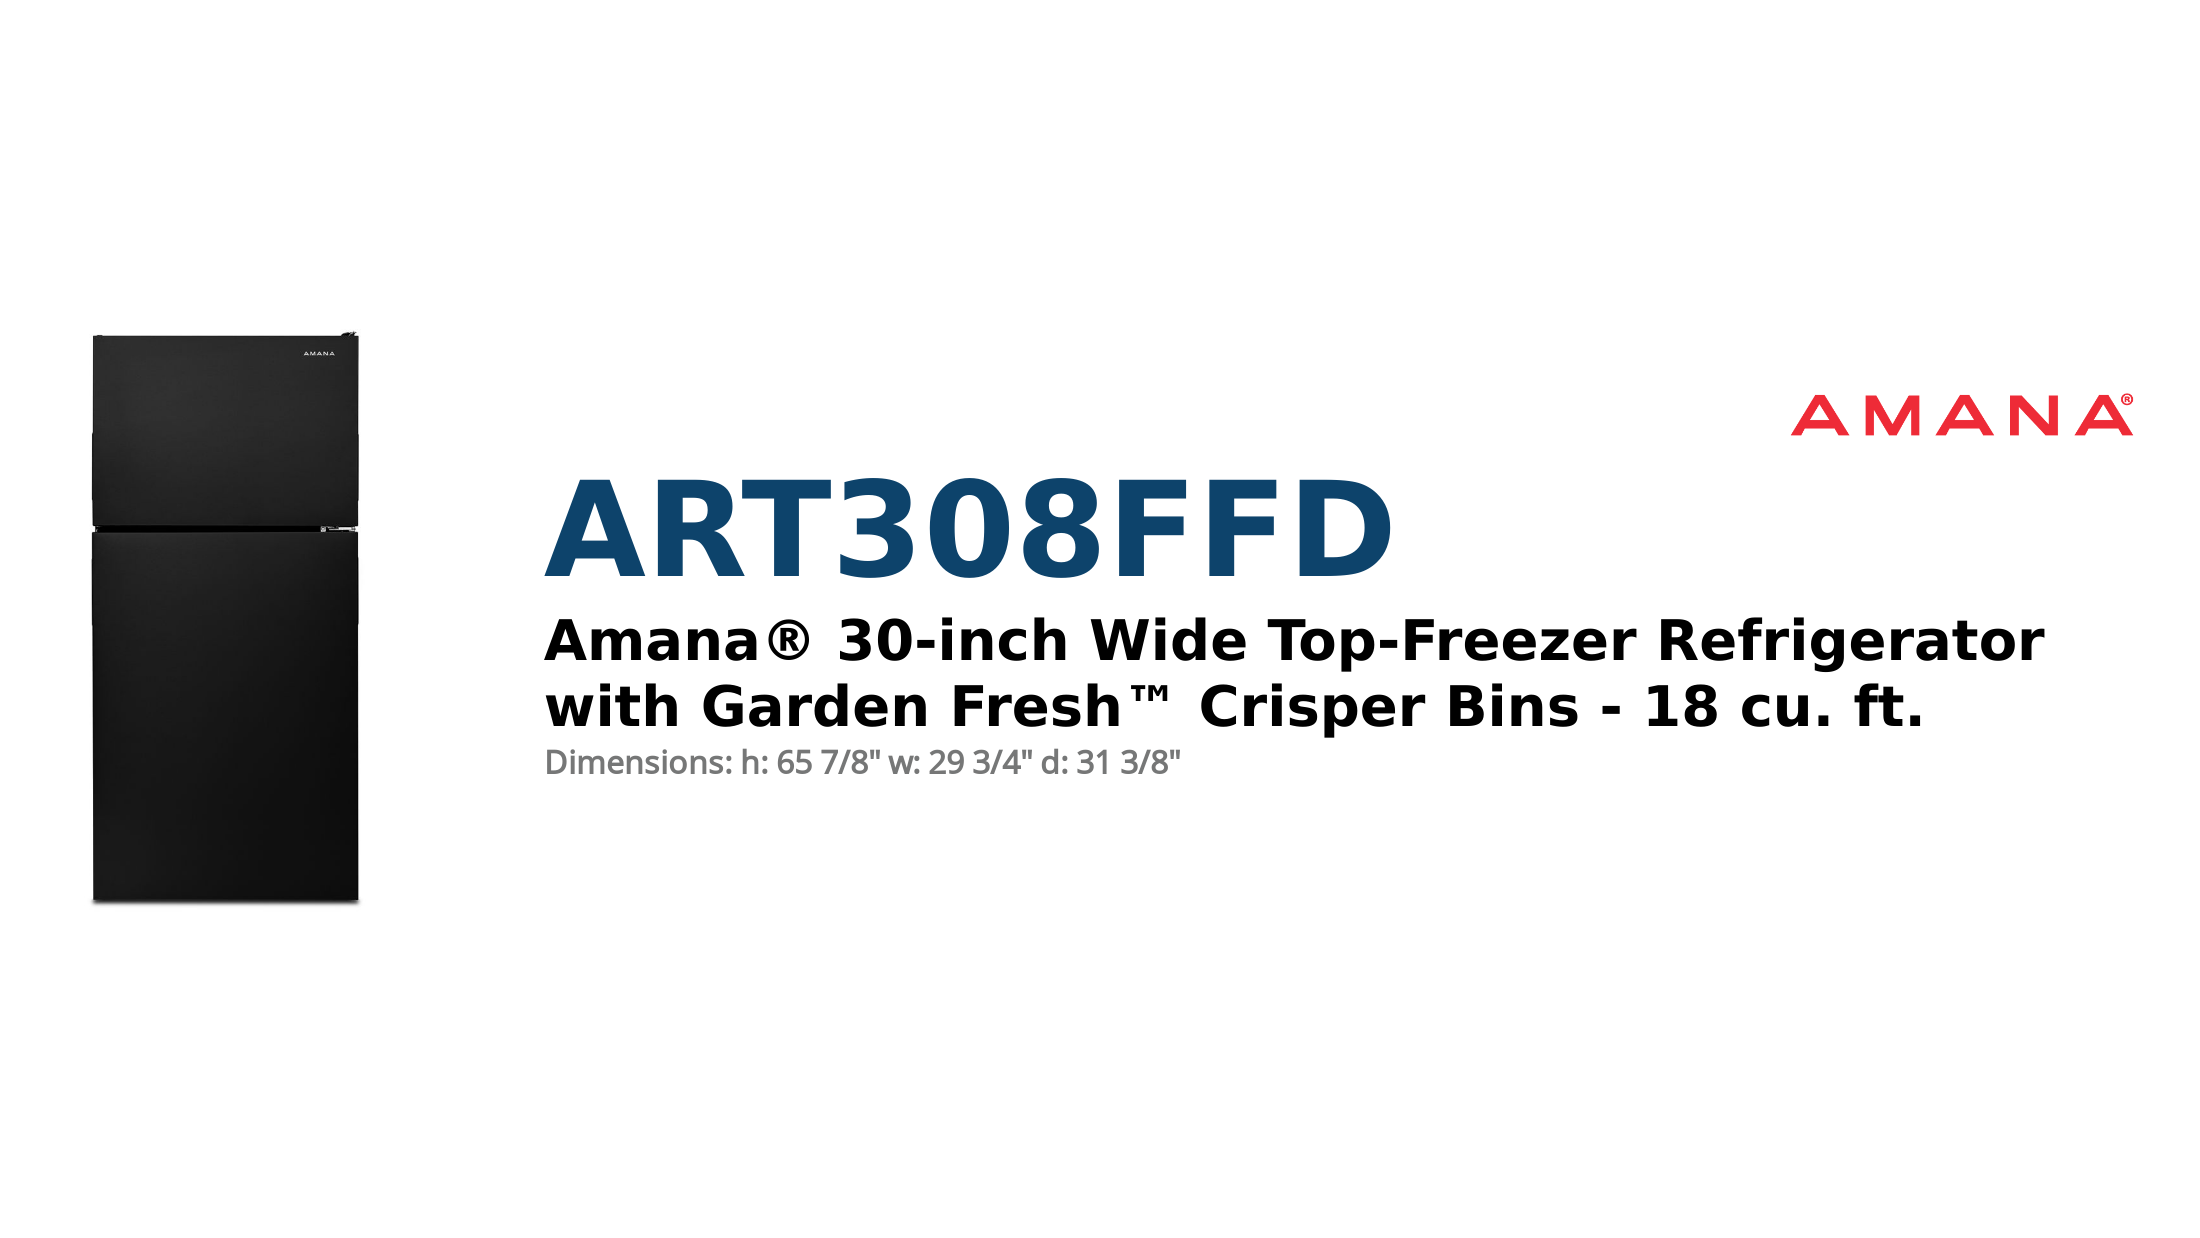 Amana® 30-inch Wide Top-Freezer Refrigerator with Garden Fresh™ Crisper Bins - 18 cu. ft.